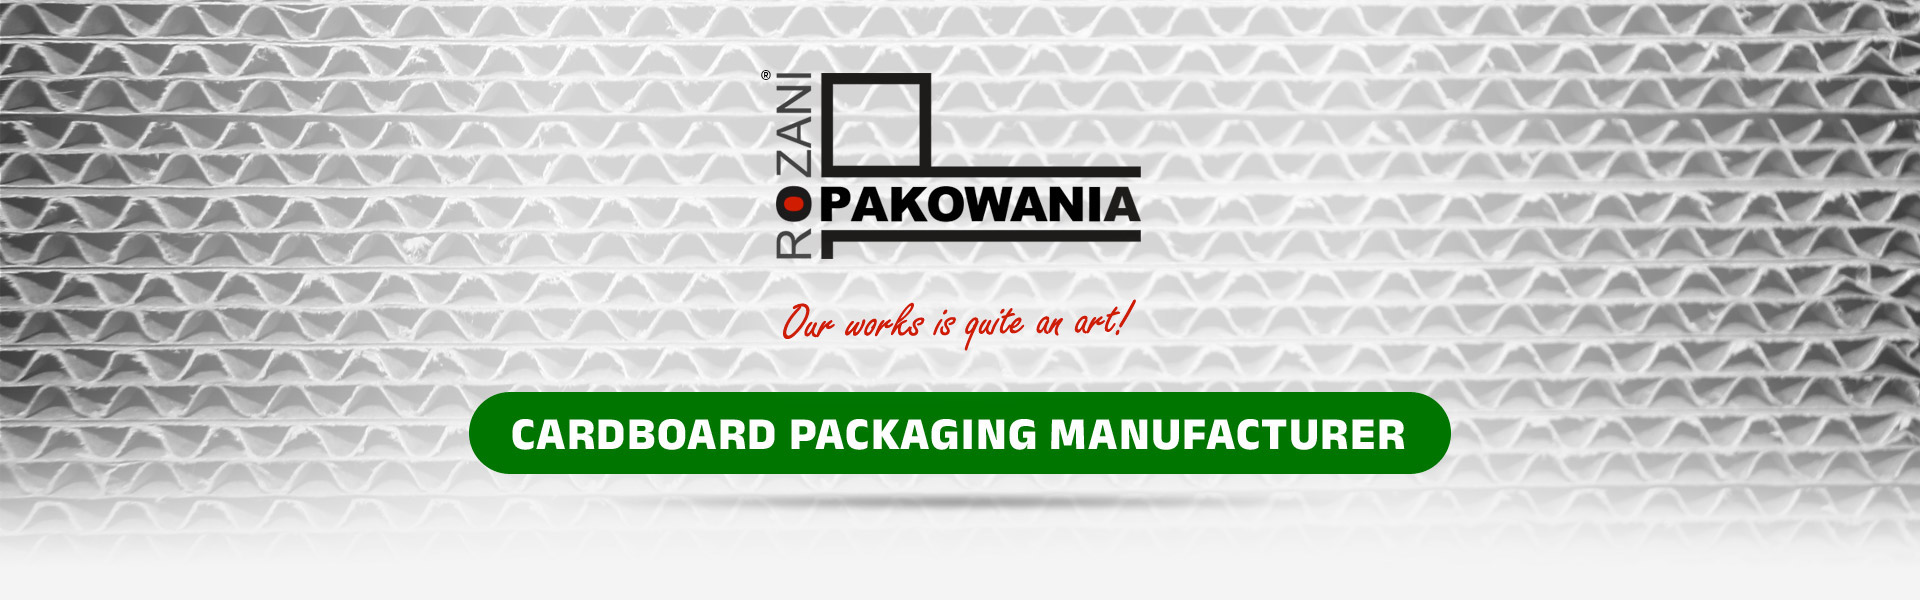 Cardboard packaging manufacturer